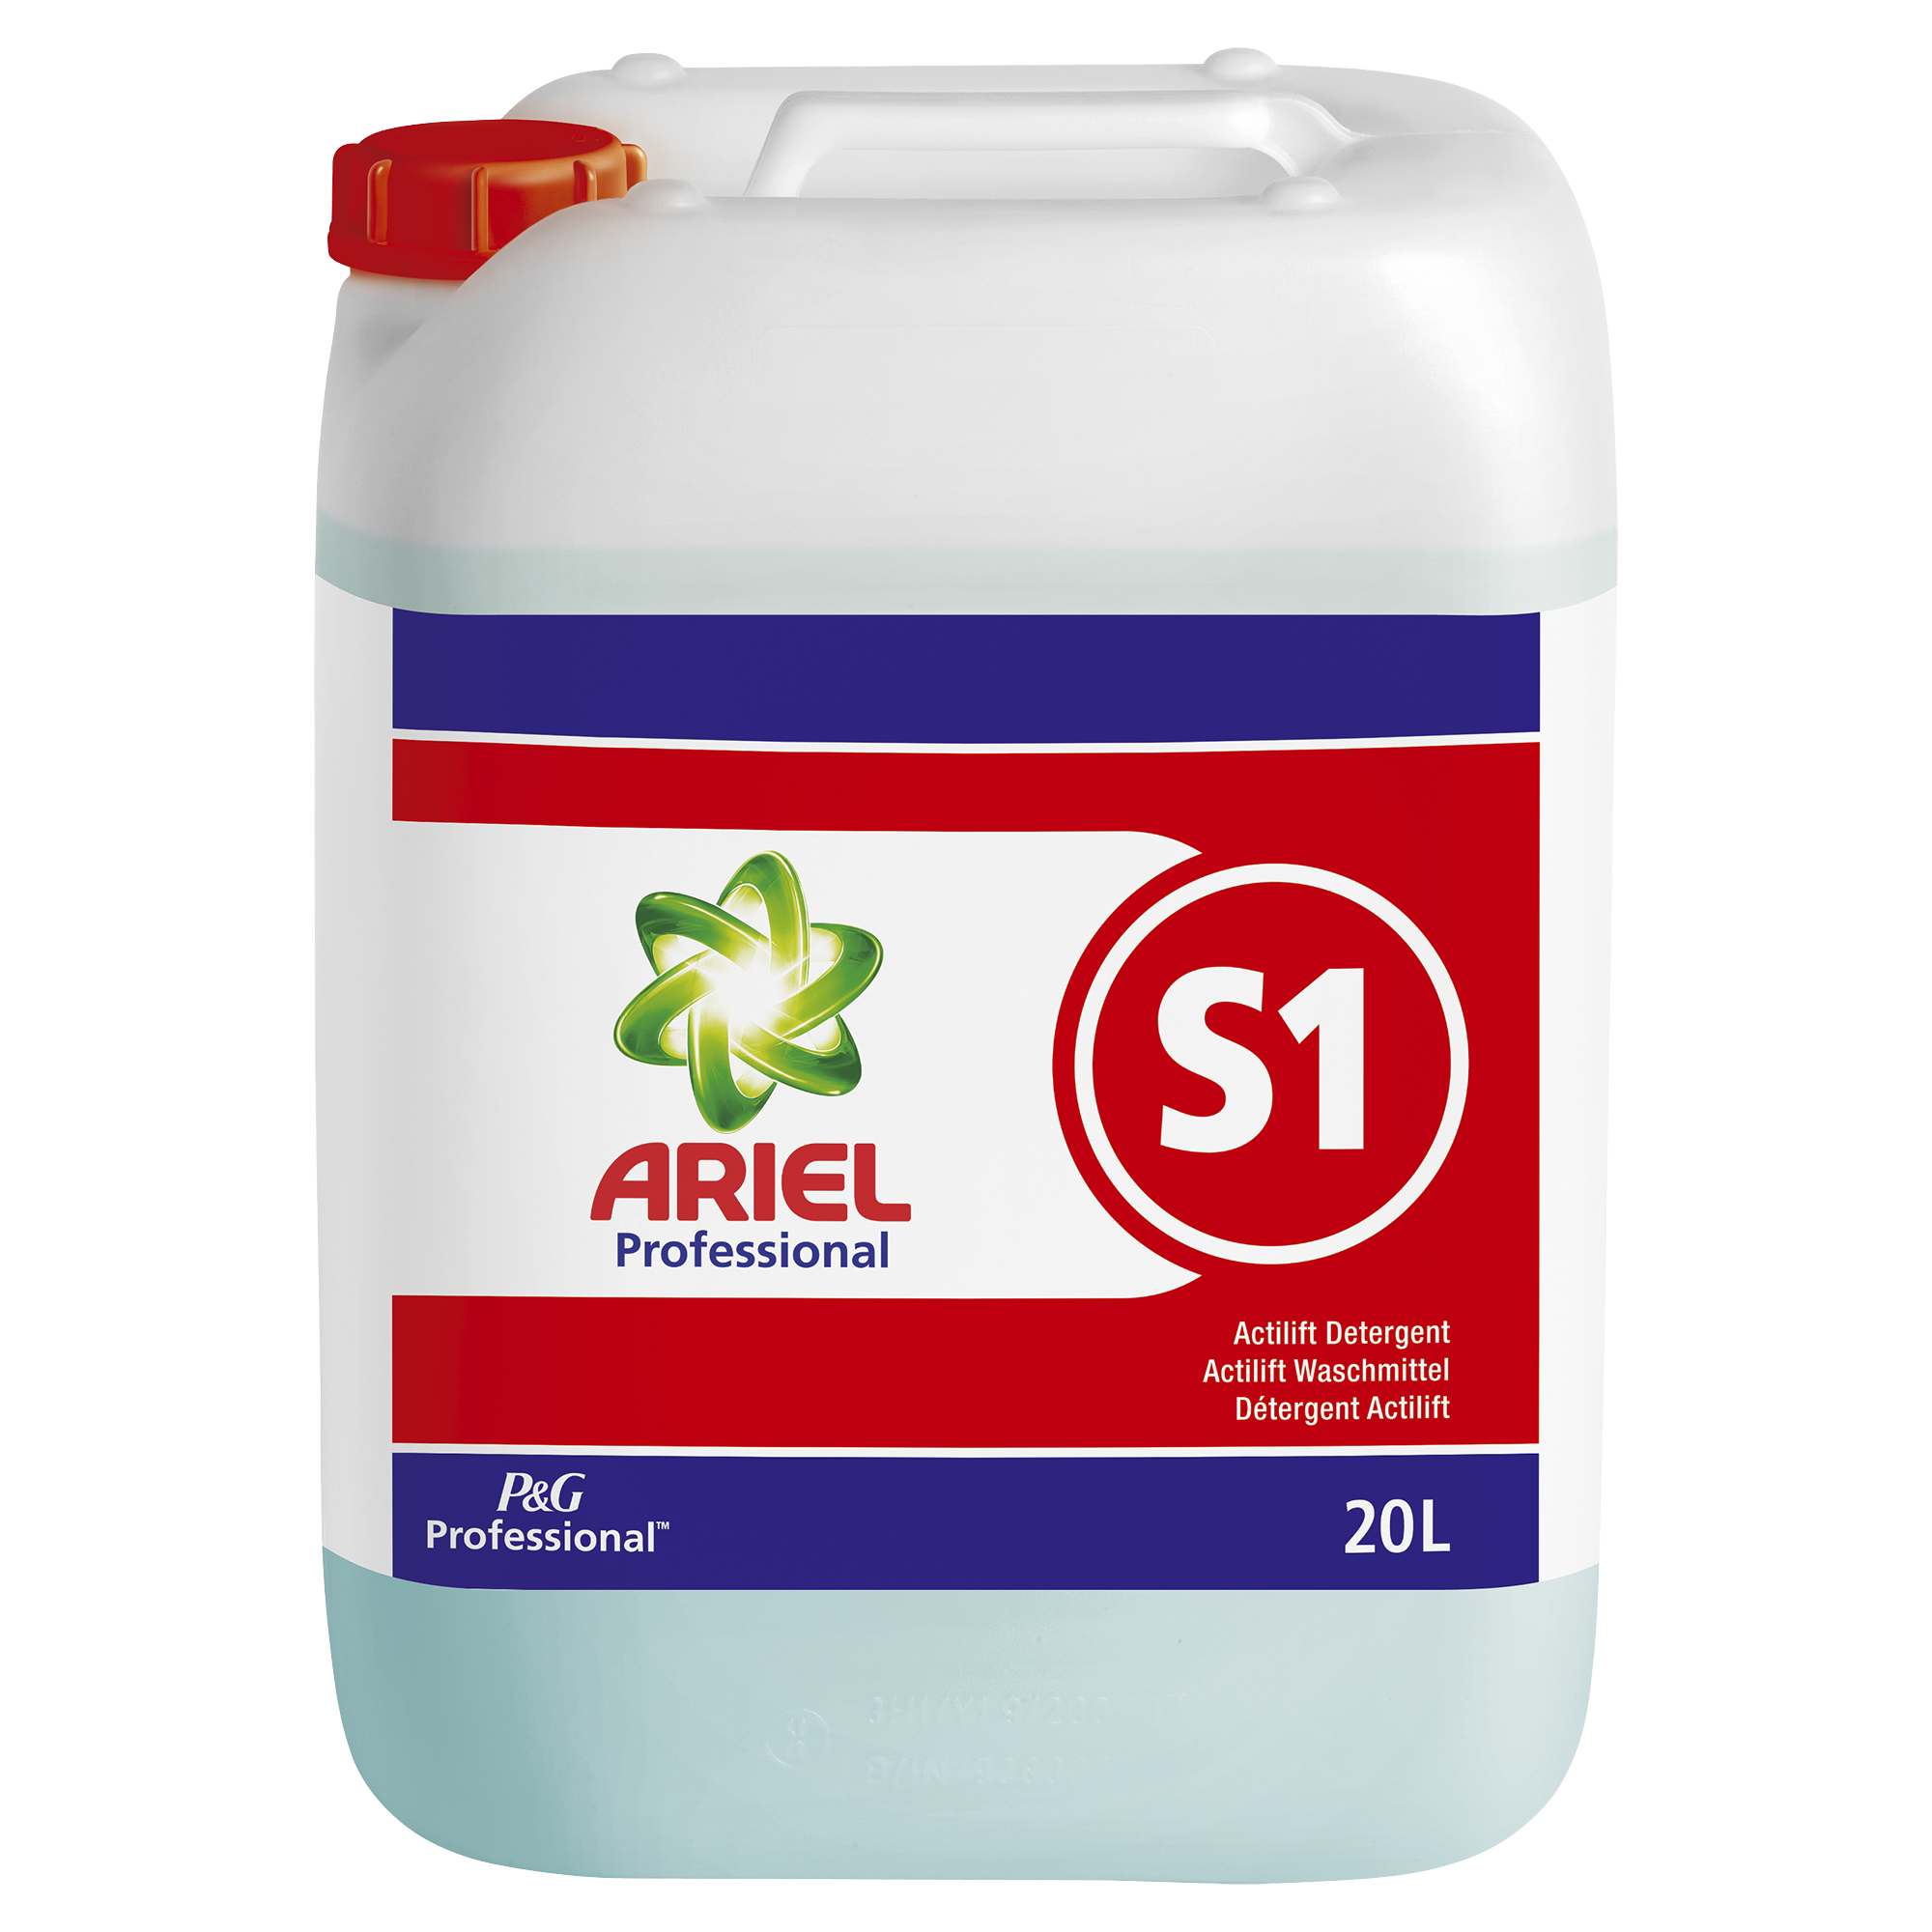 Professional Ariel Vollwaschmittel 20l,System 1